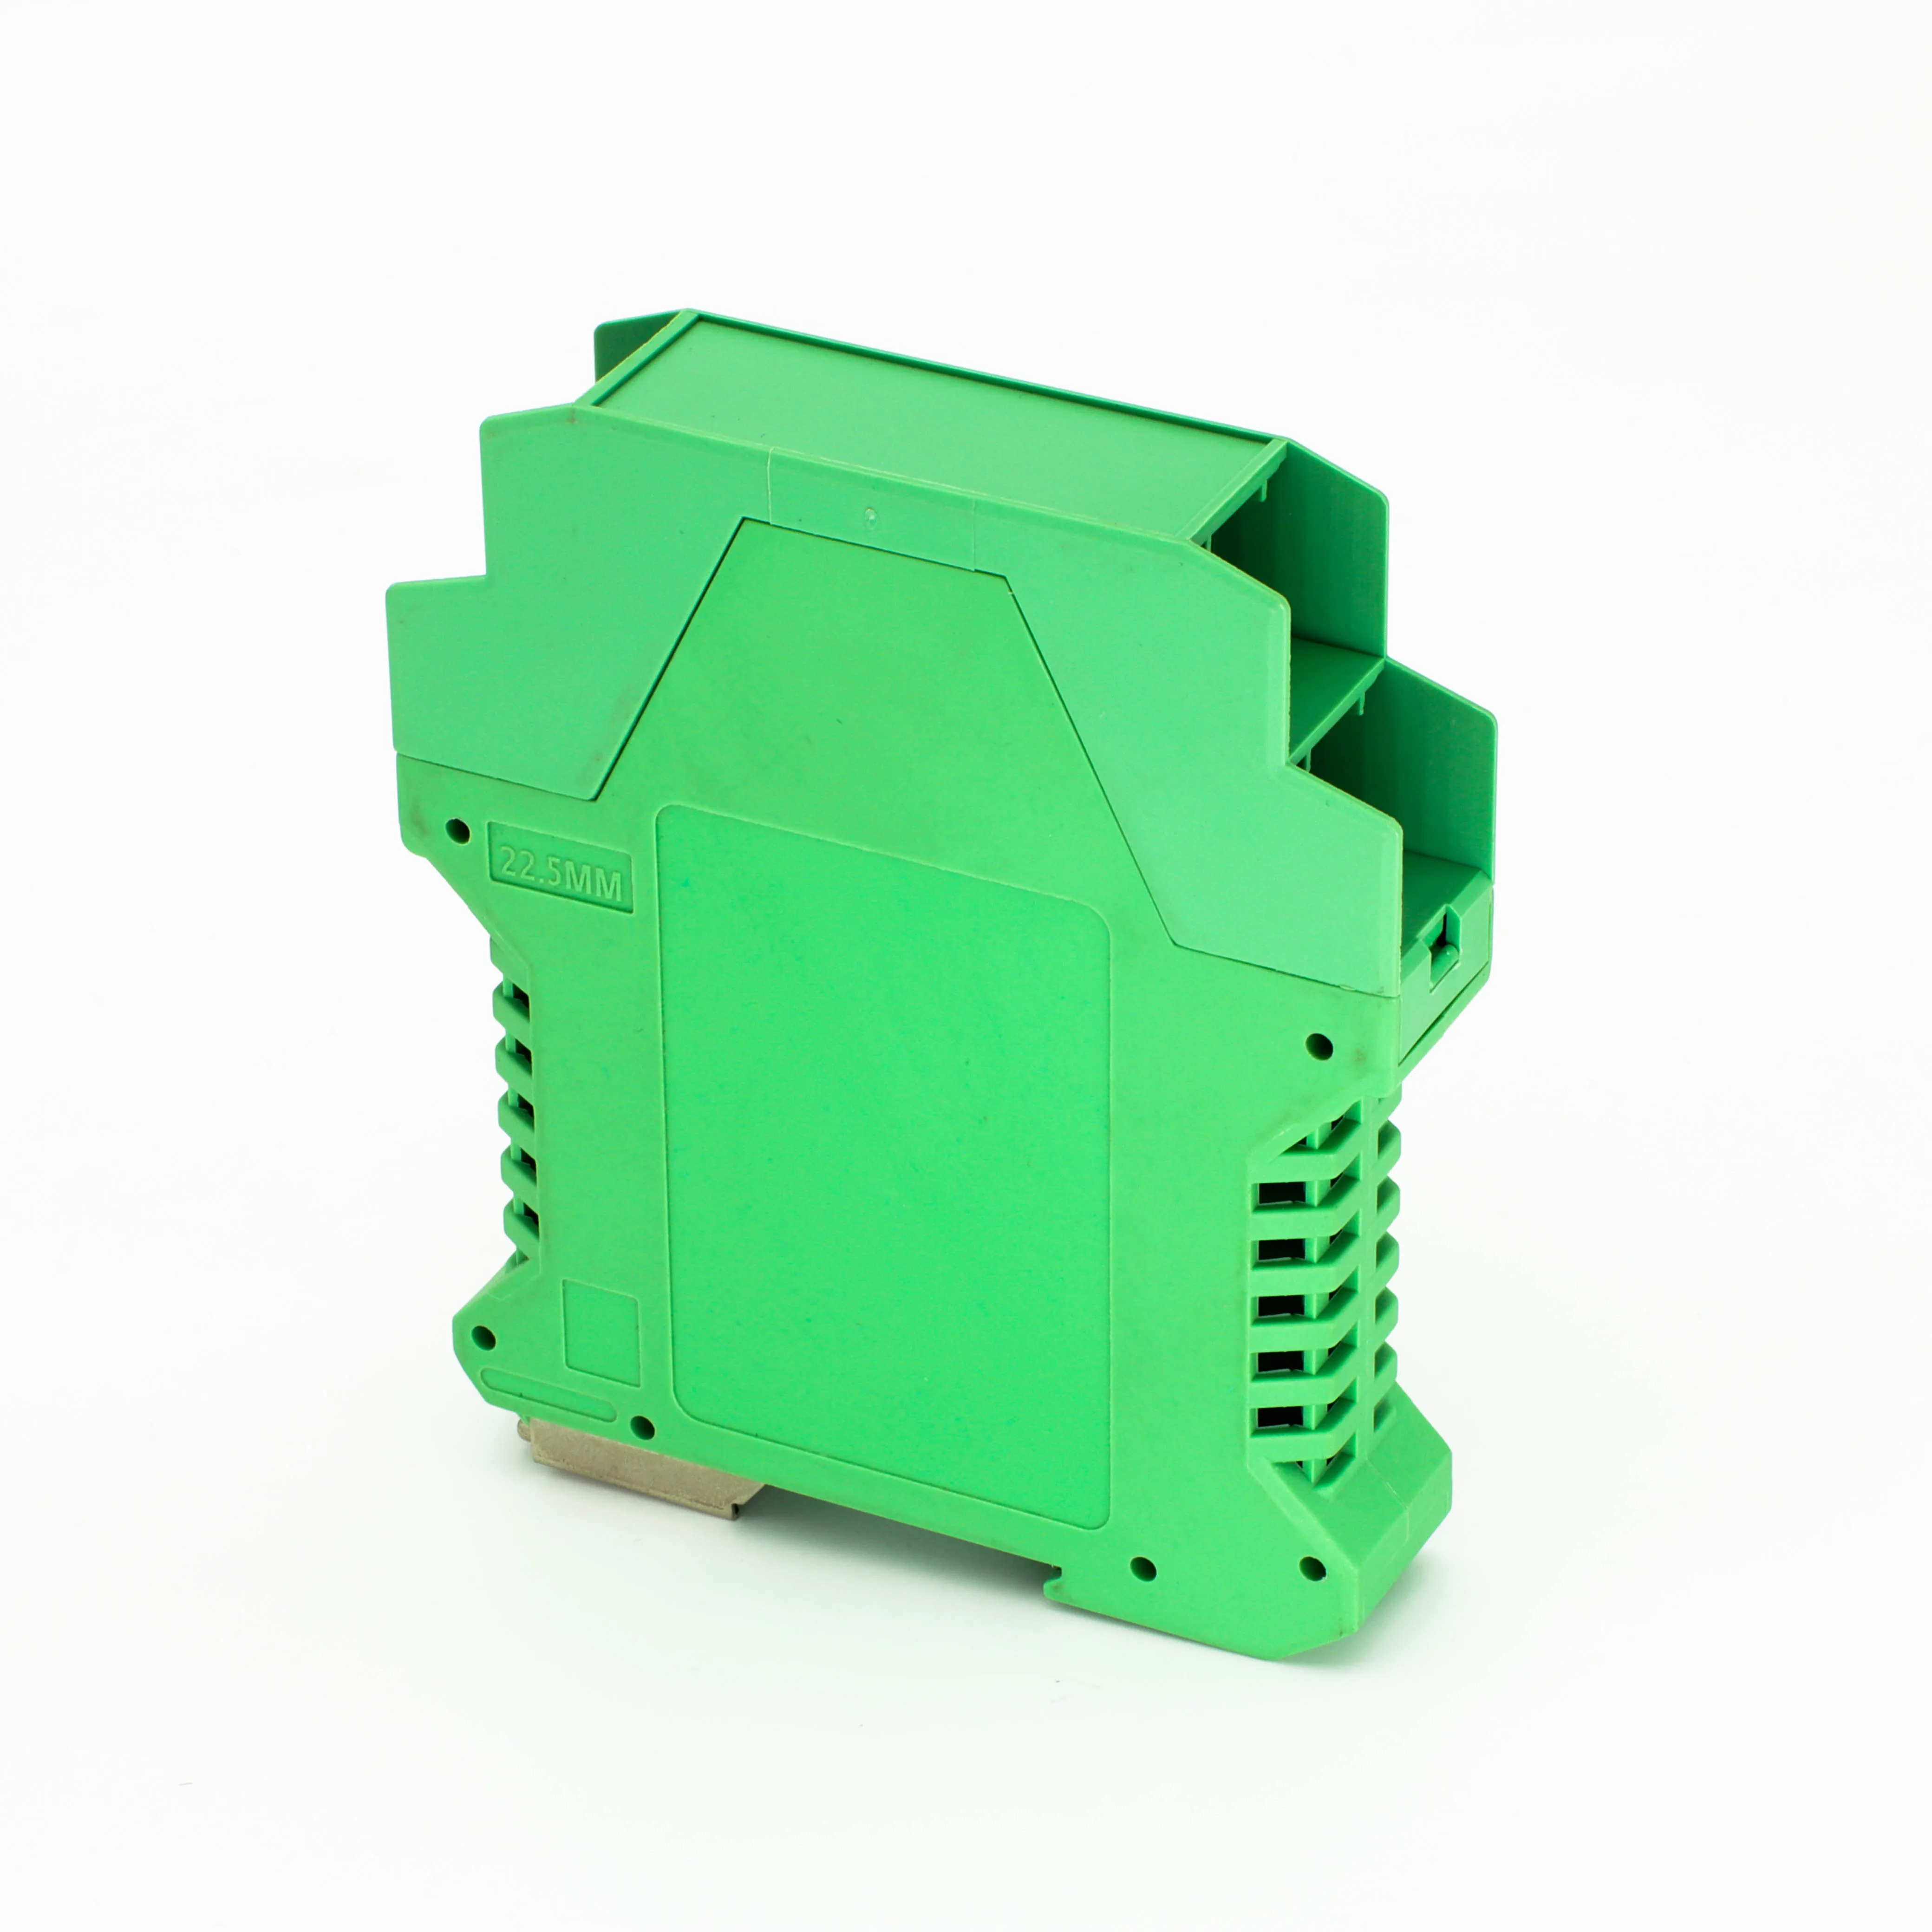 22.5mm Width Din Rail Mountable Modular Pcb Enclosure Control Boxes Simple Box Green